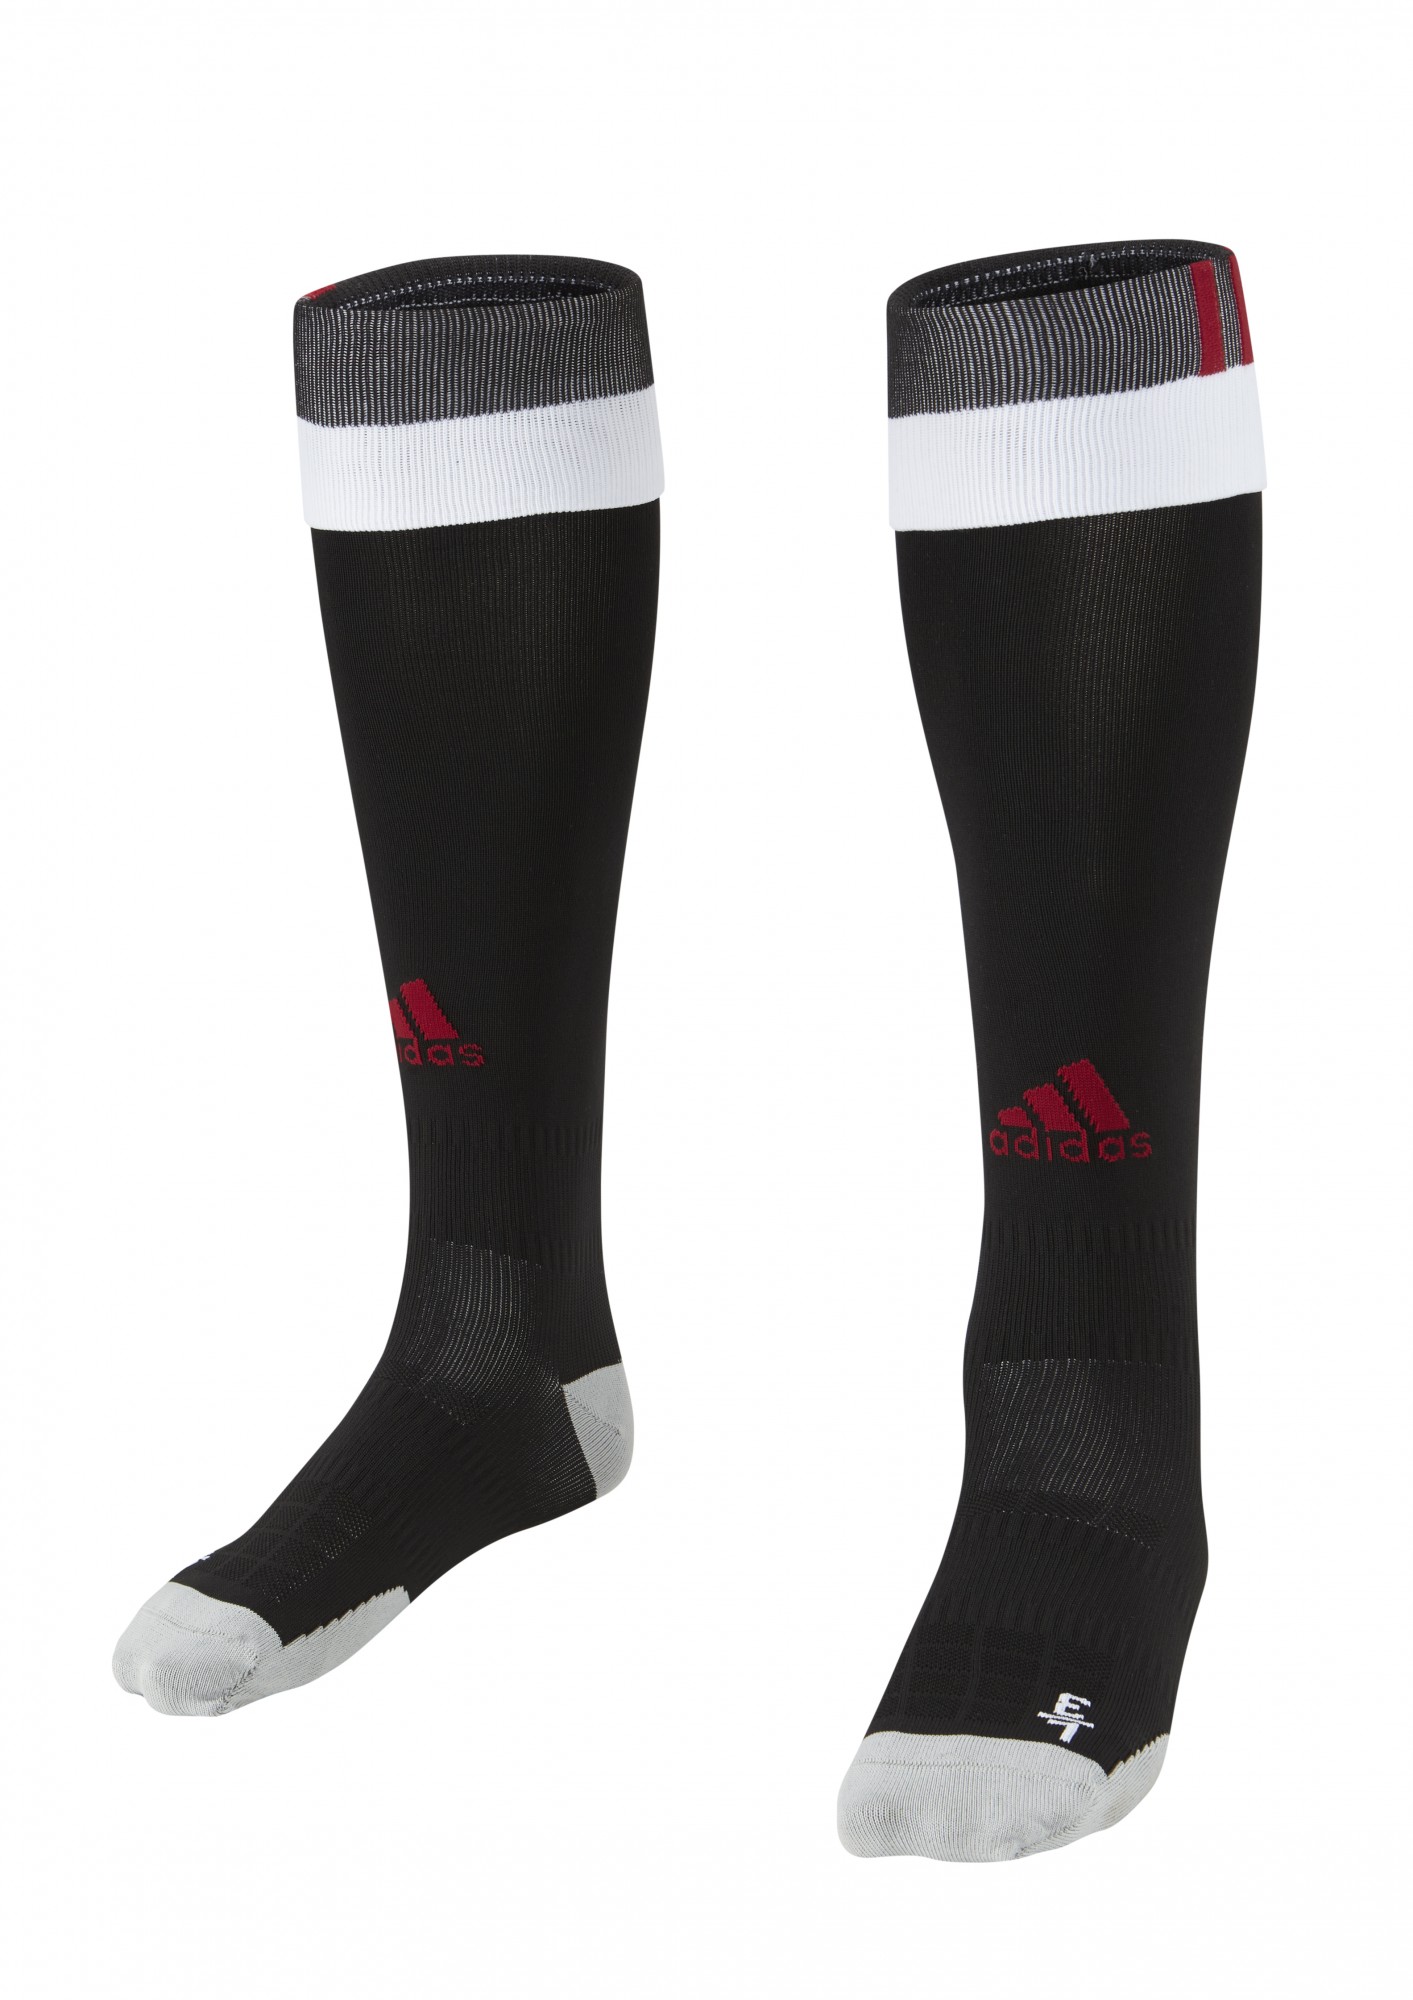 Sheffield United Home Kit 2016-17 socks